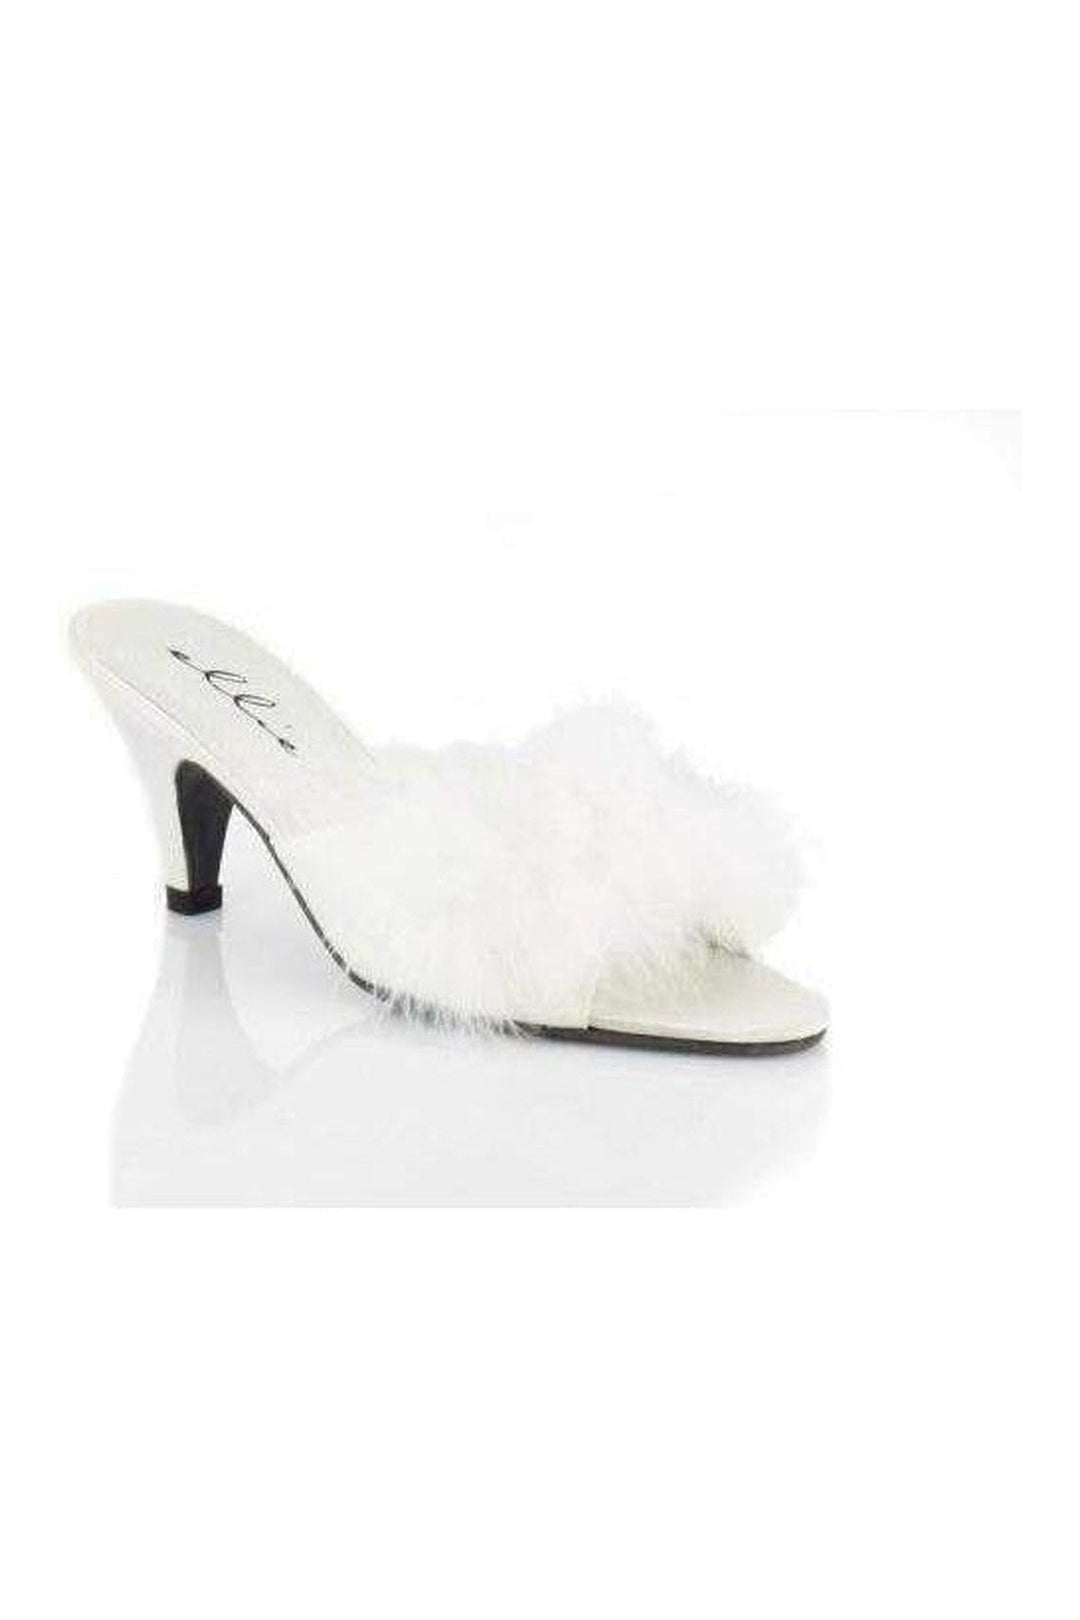 PHOEBE Marabou | White Patent-Ellie Shoes-SEXYSHOES.COM